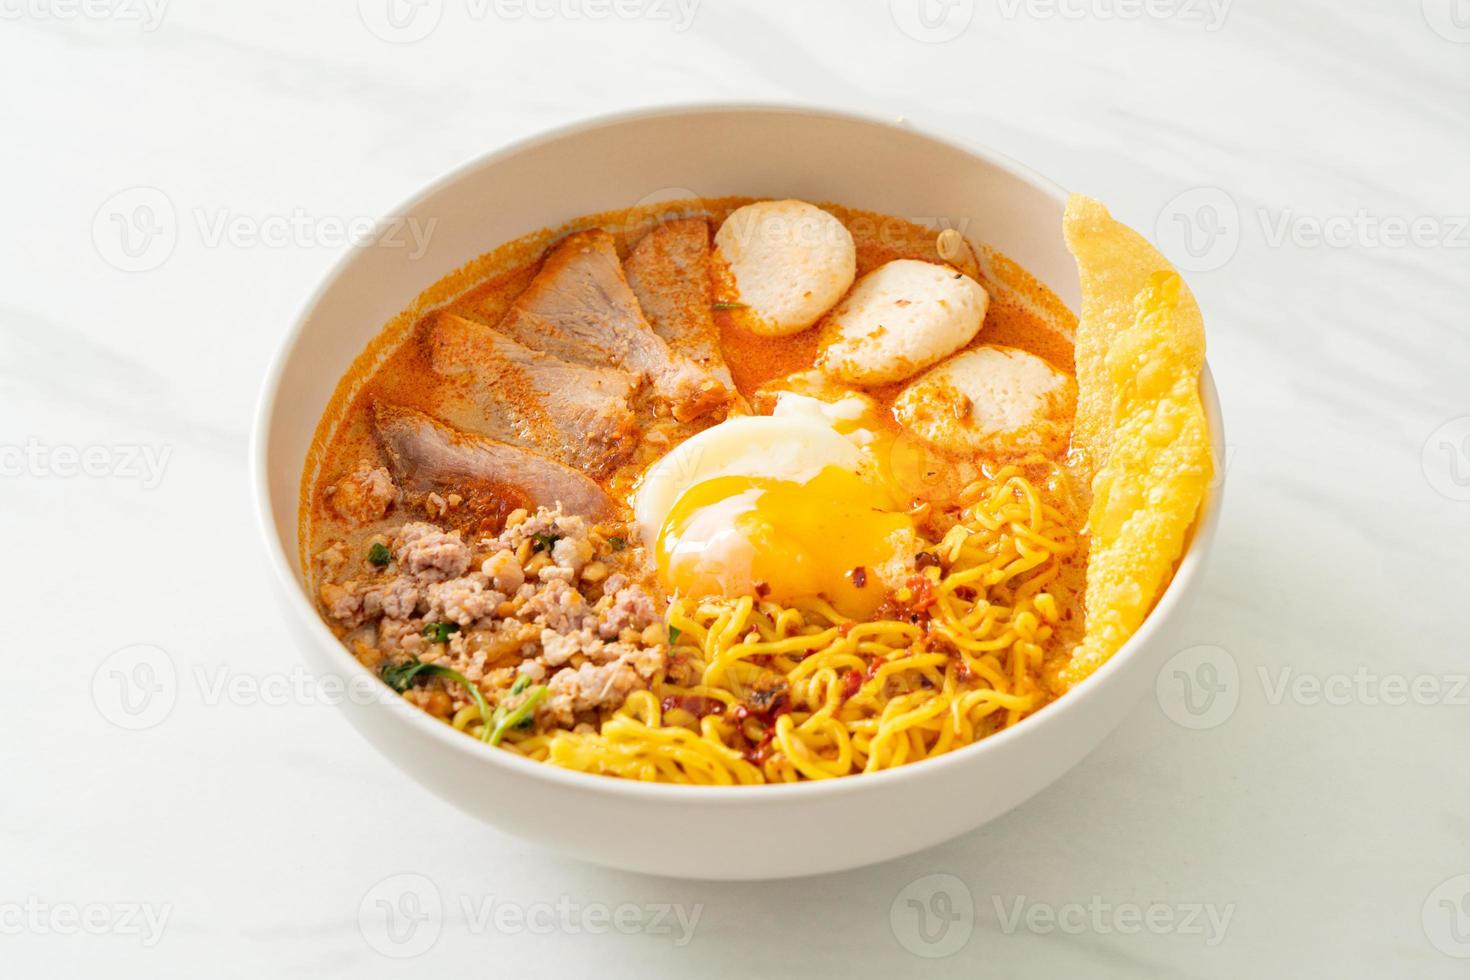 eiernoedels met varkensvlees en gehaktbal in pittige soep of tom yum noedels in aziatische stijl foto